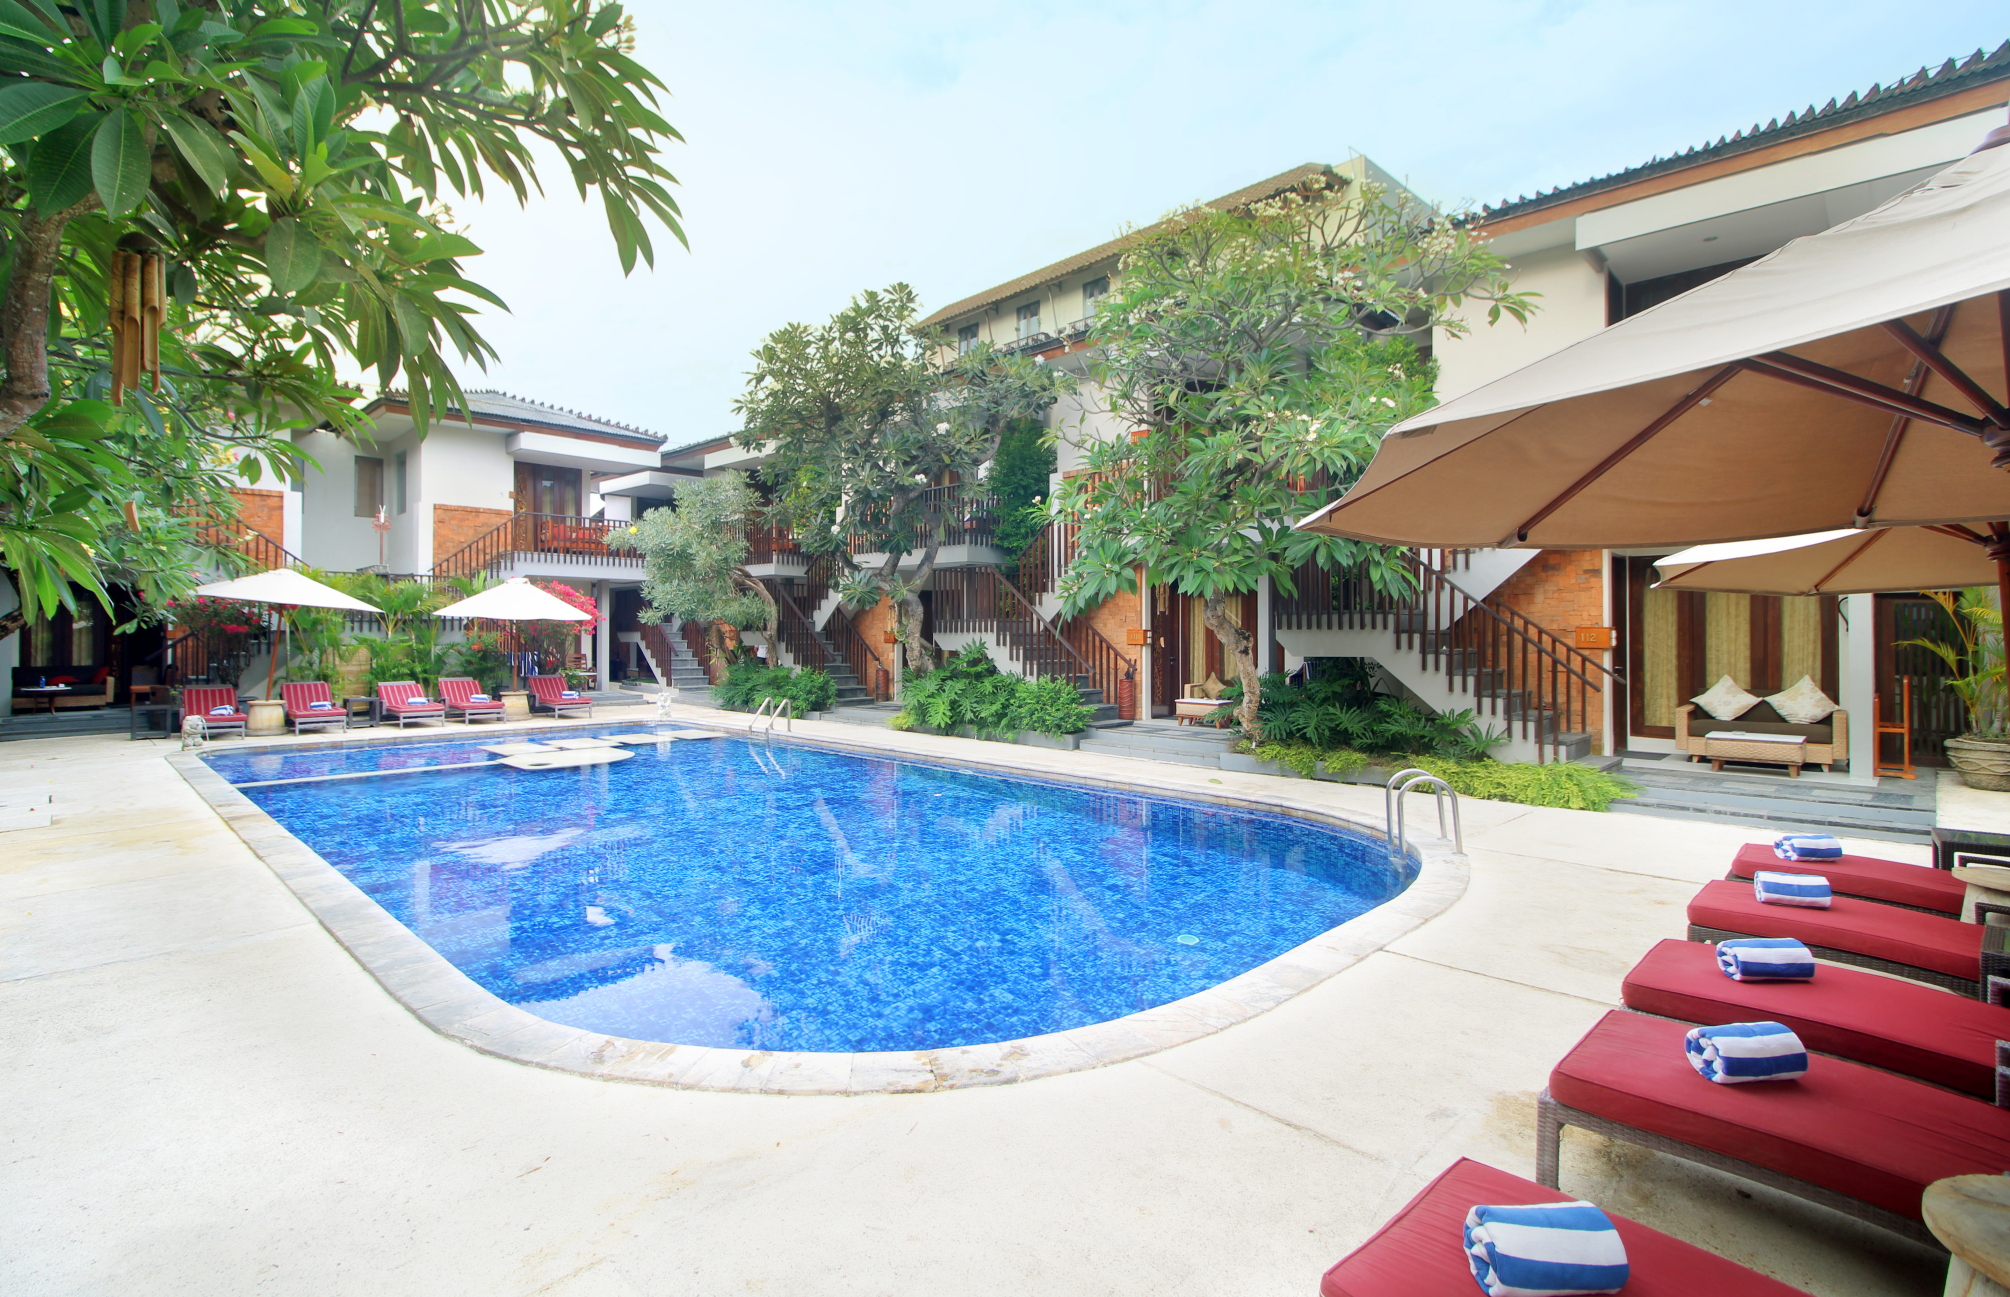 rama garden hotel facilities - pool